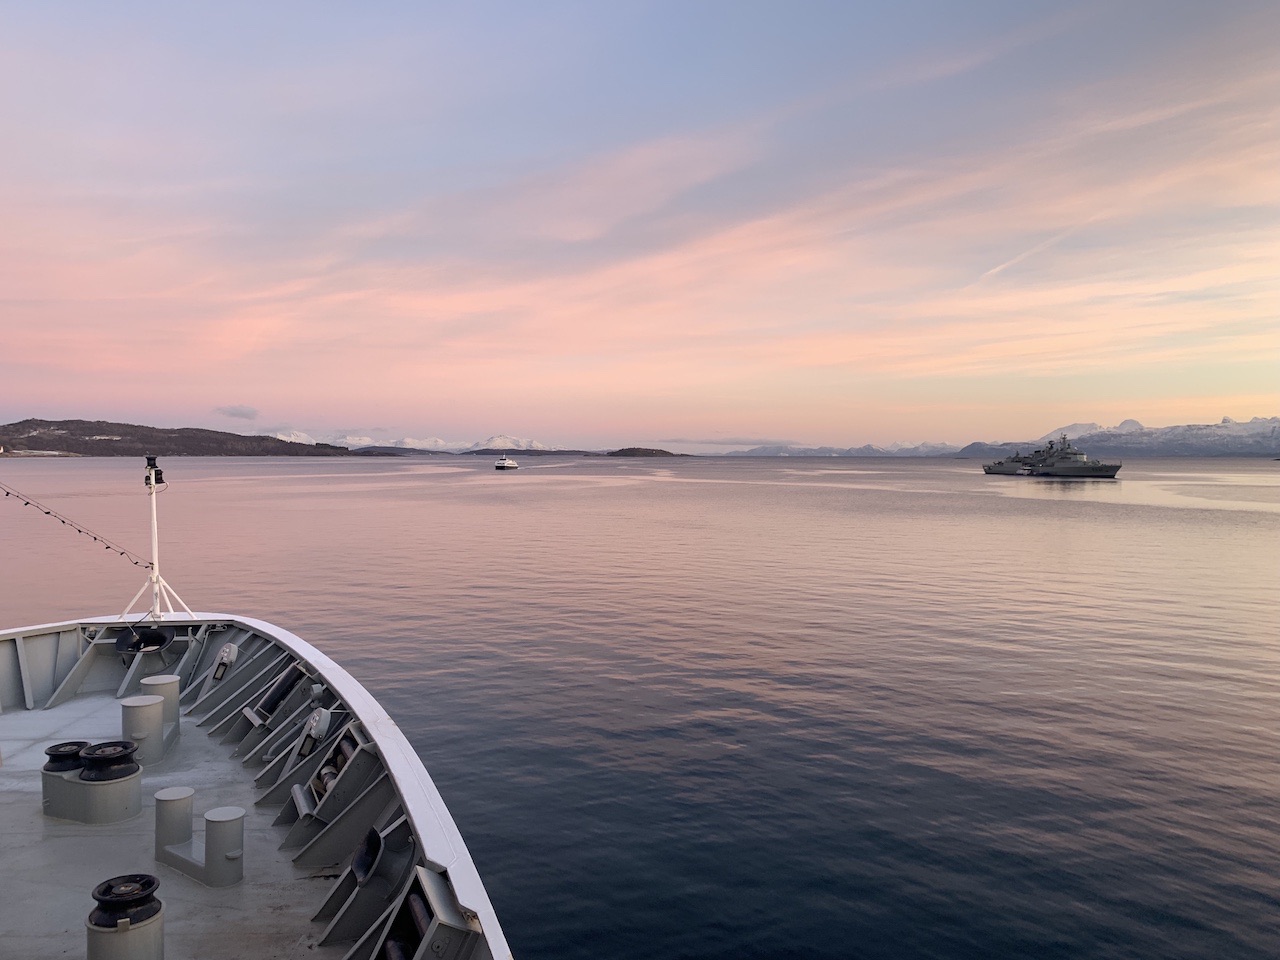 A (Short) Hurtigruten Voyage: From Port to Port